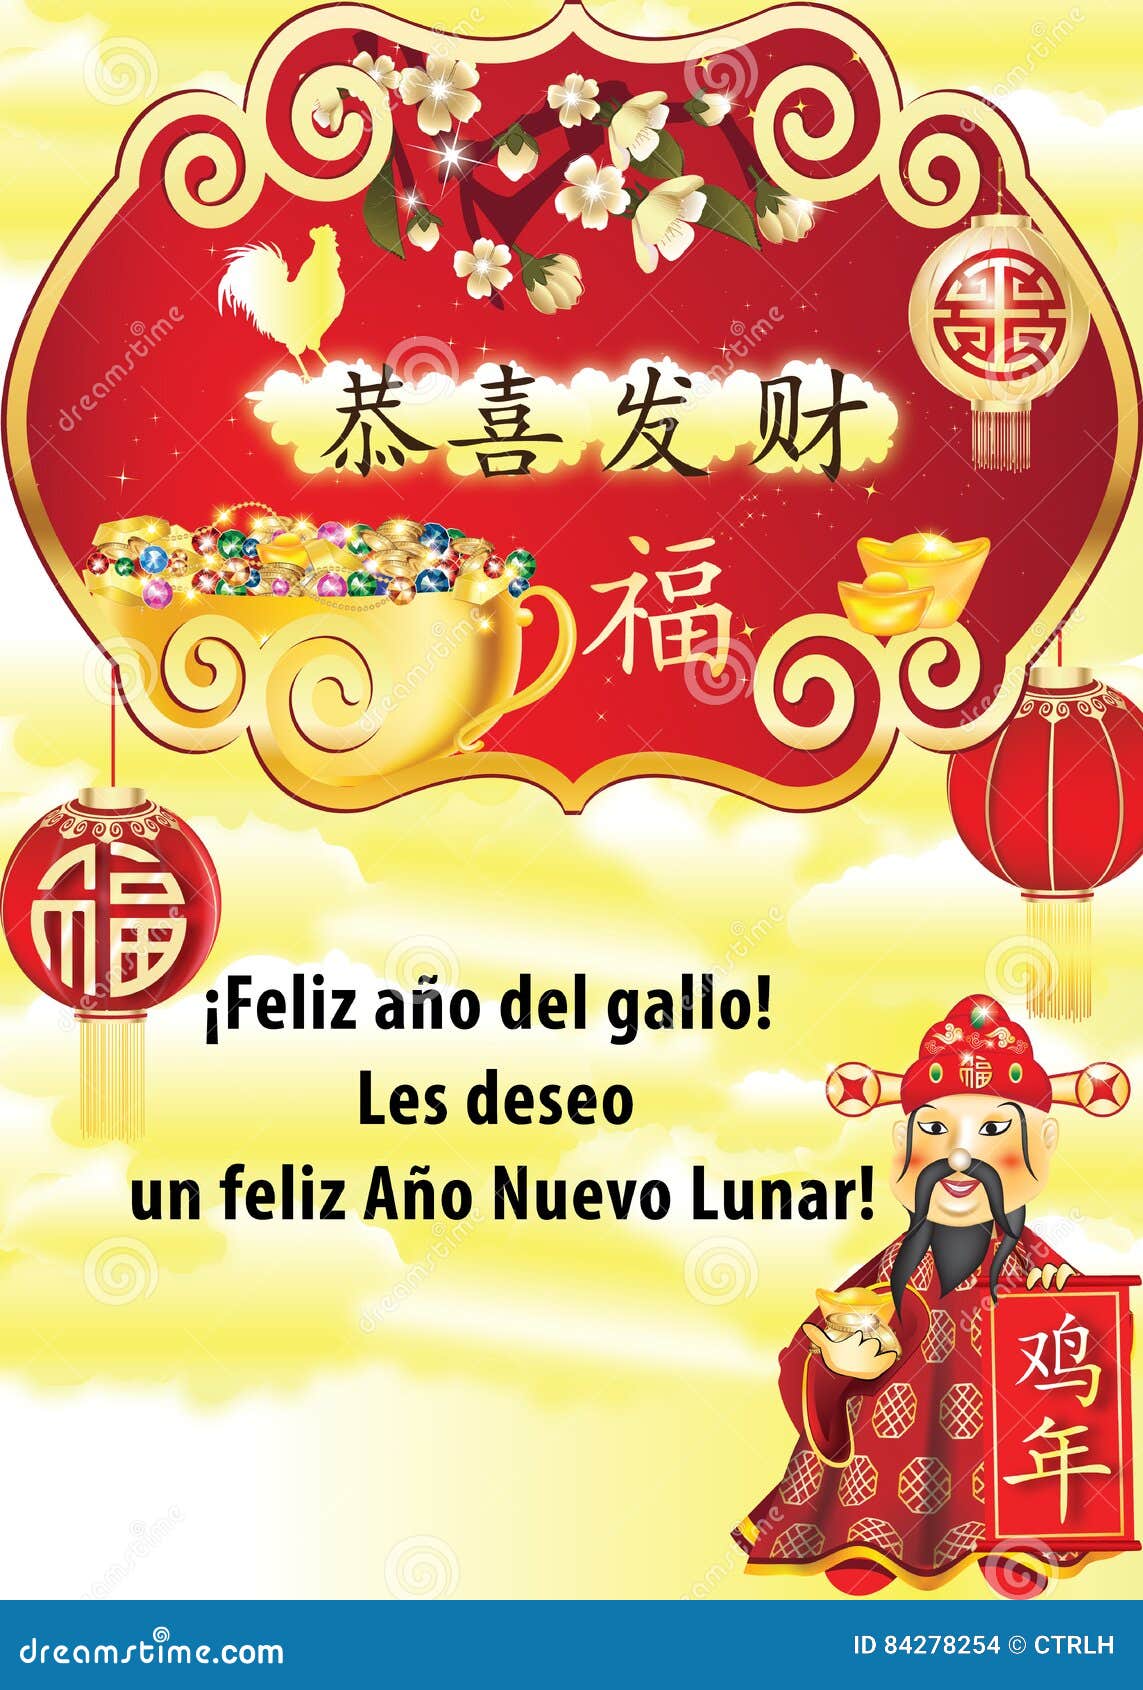 Chinese New Year In Spanish